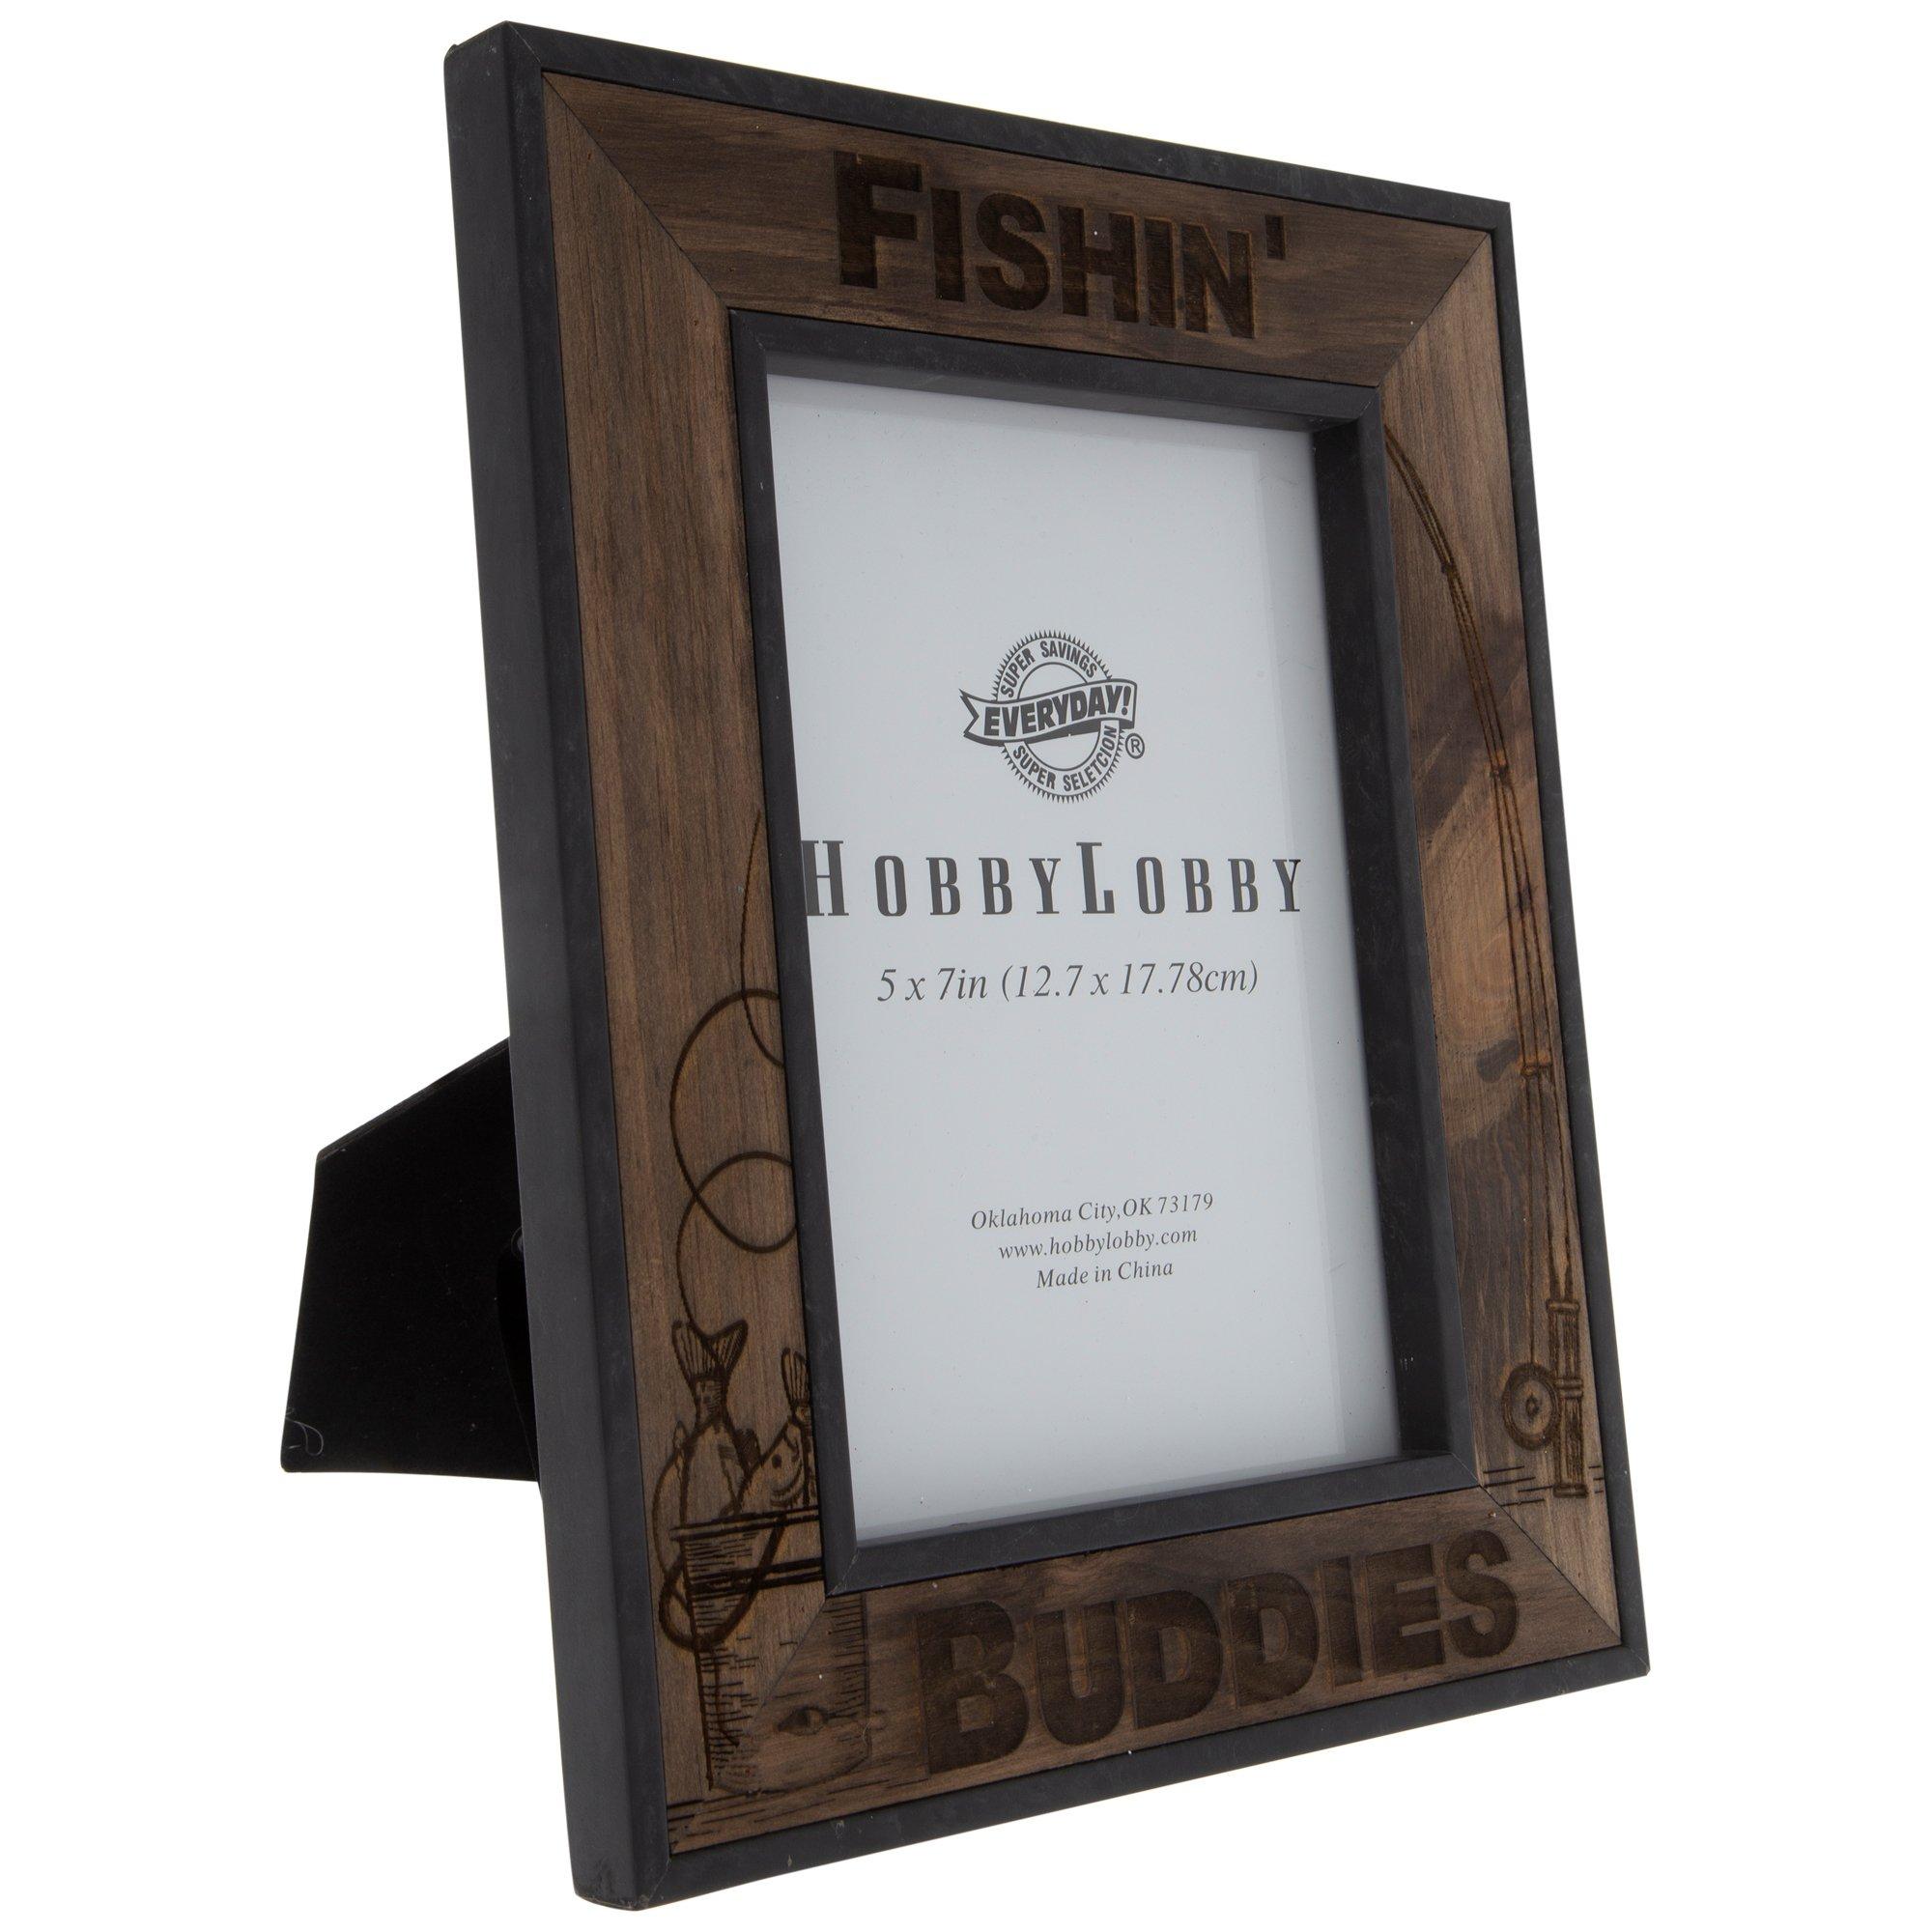 Fishin Buddies Wood Frame - 5 x 7, Hobby Lobby